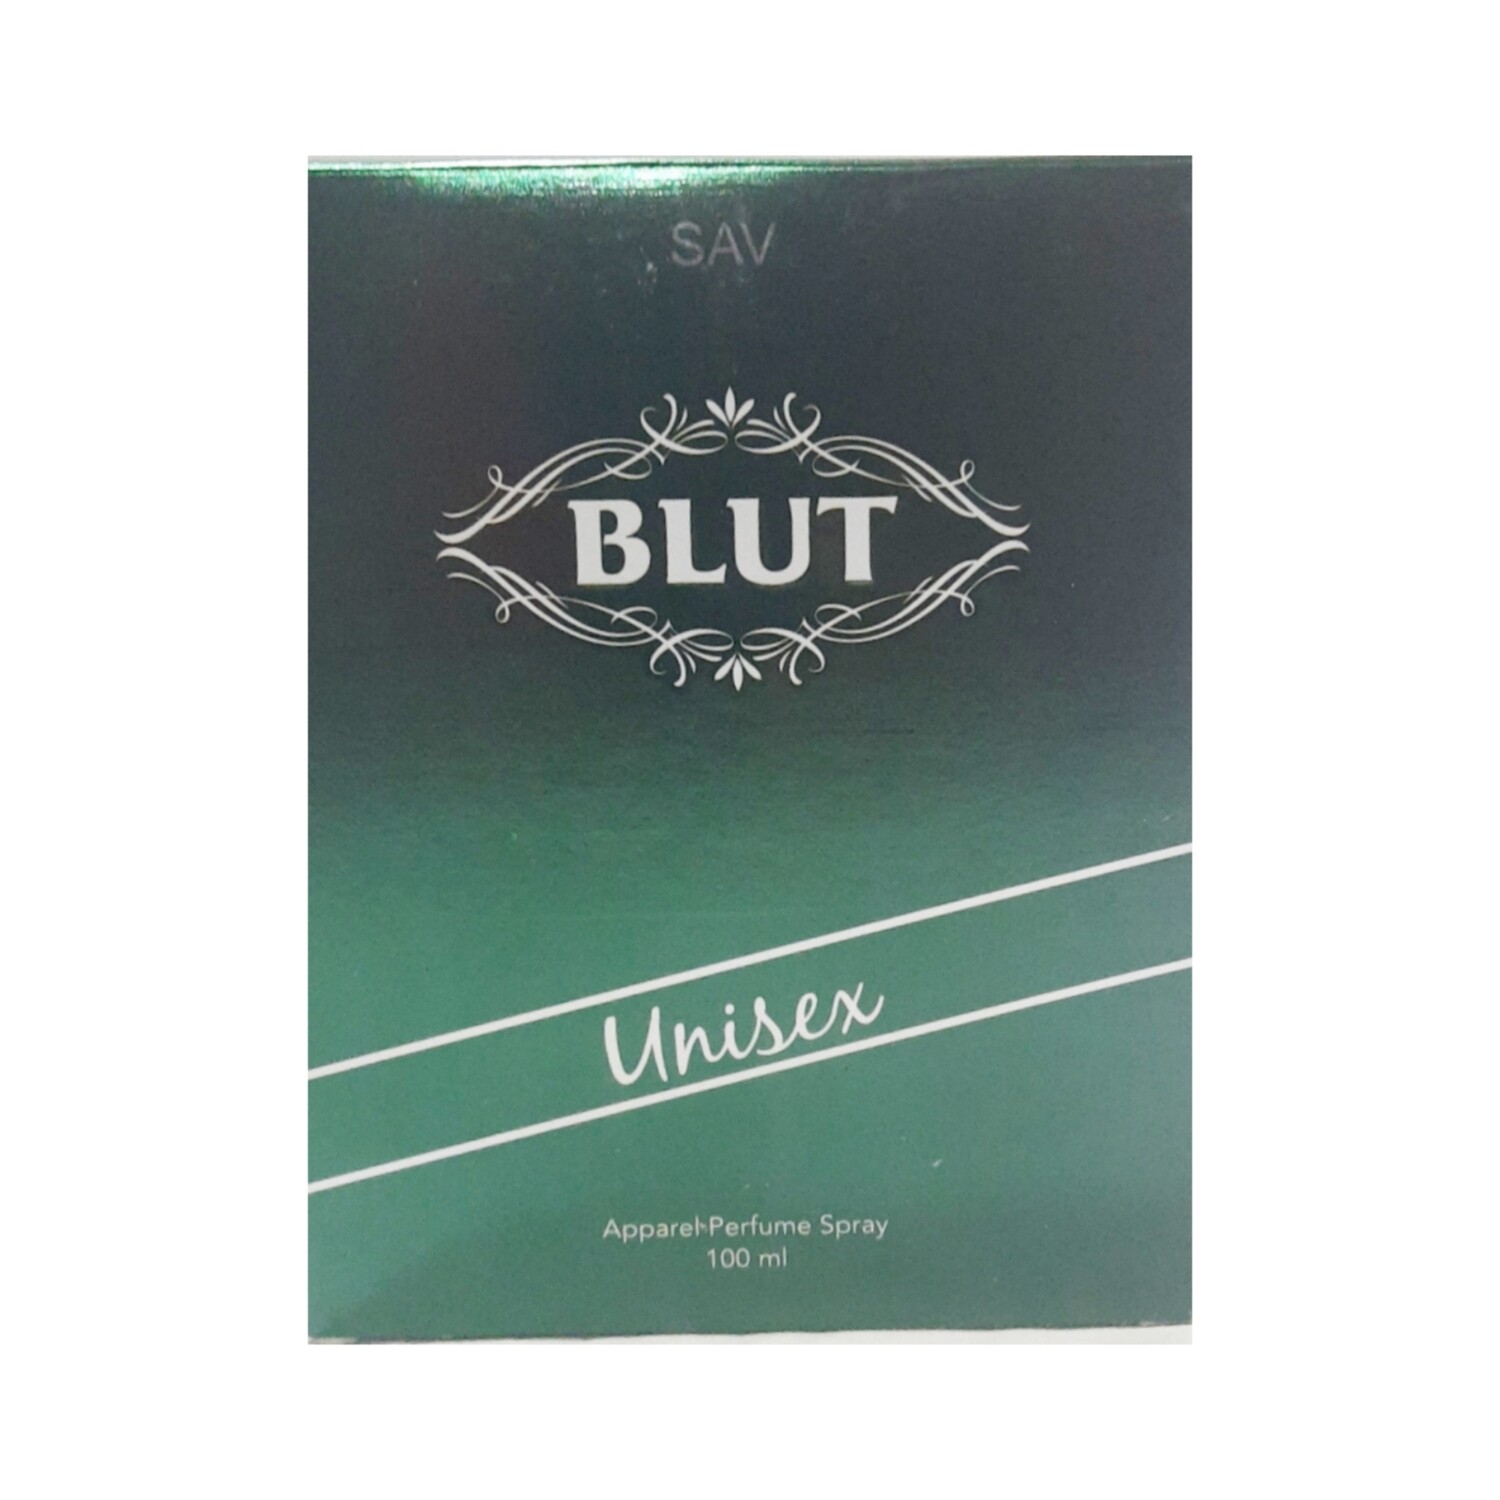 SAV BLUT Apparel Perfume Spray 100 ml